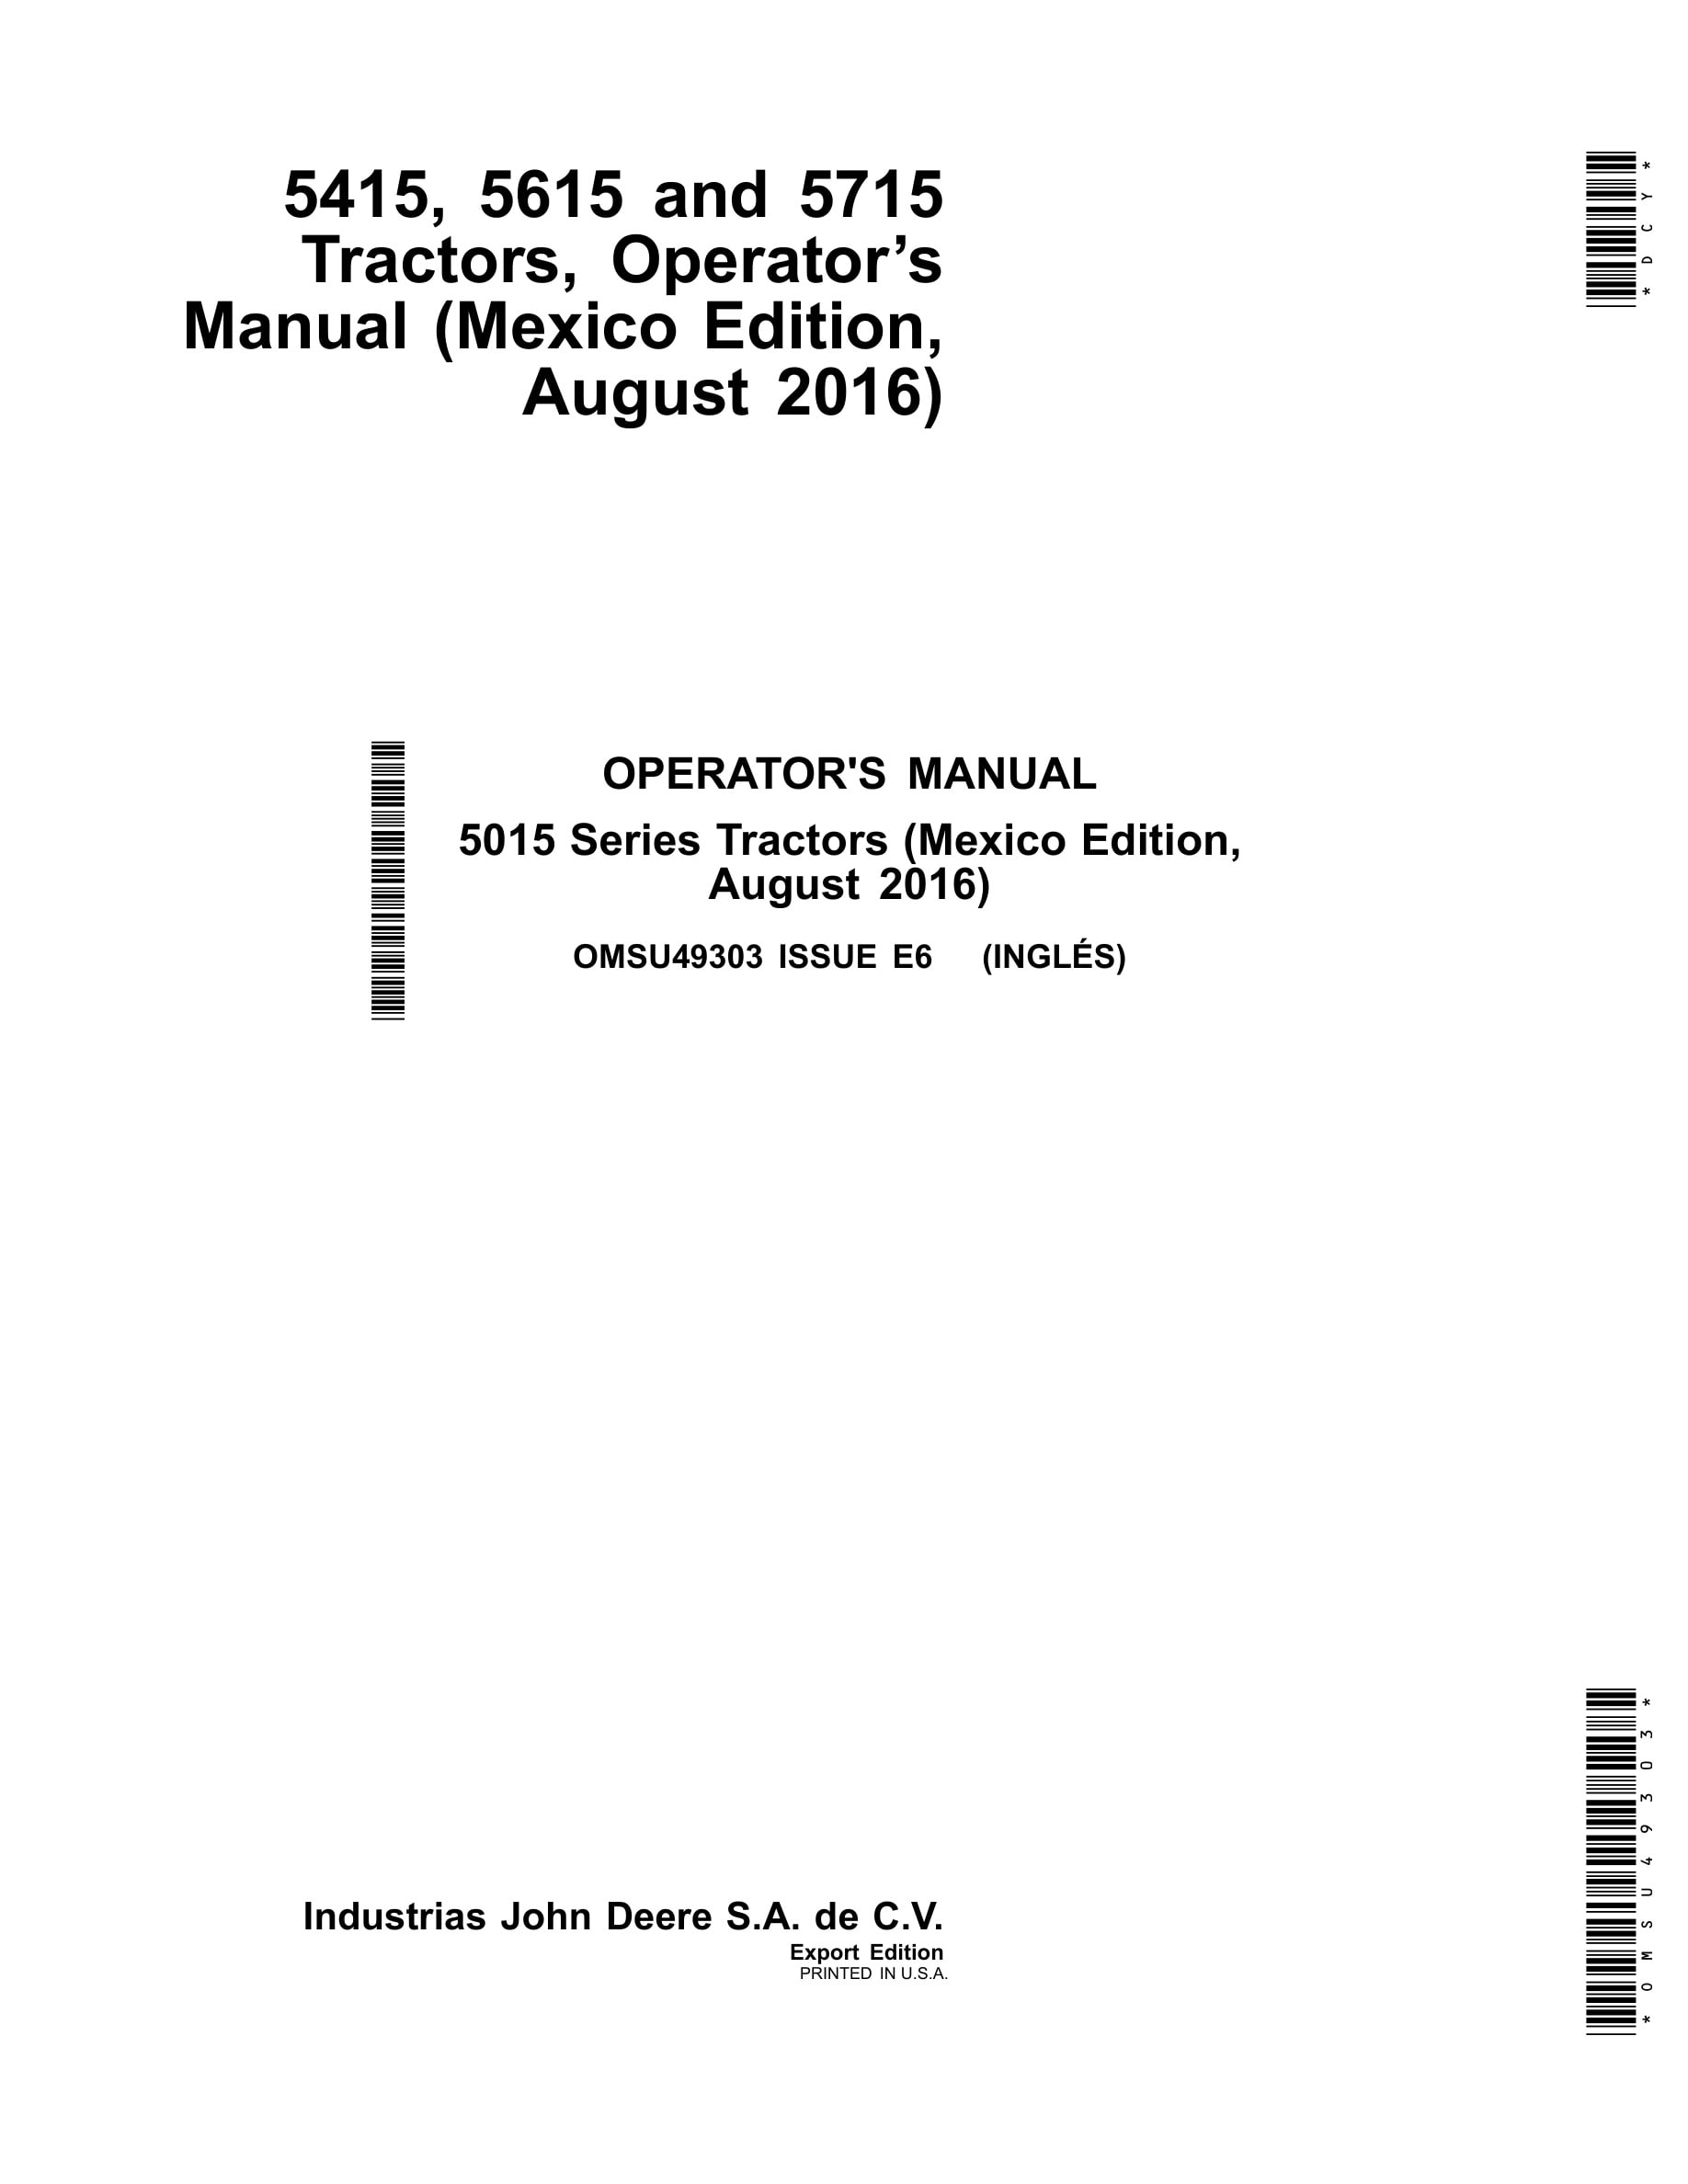 John Deere 5415, 5615 And 5715 Tractors Operator Manuals OMSU49303-1